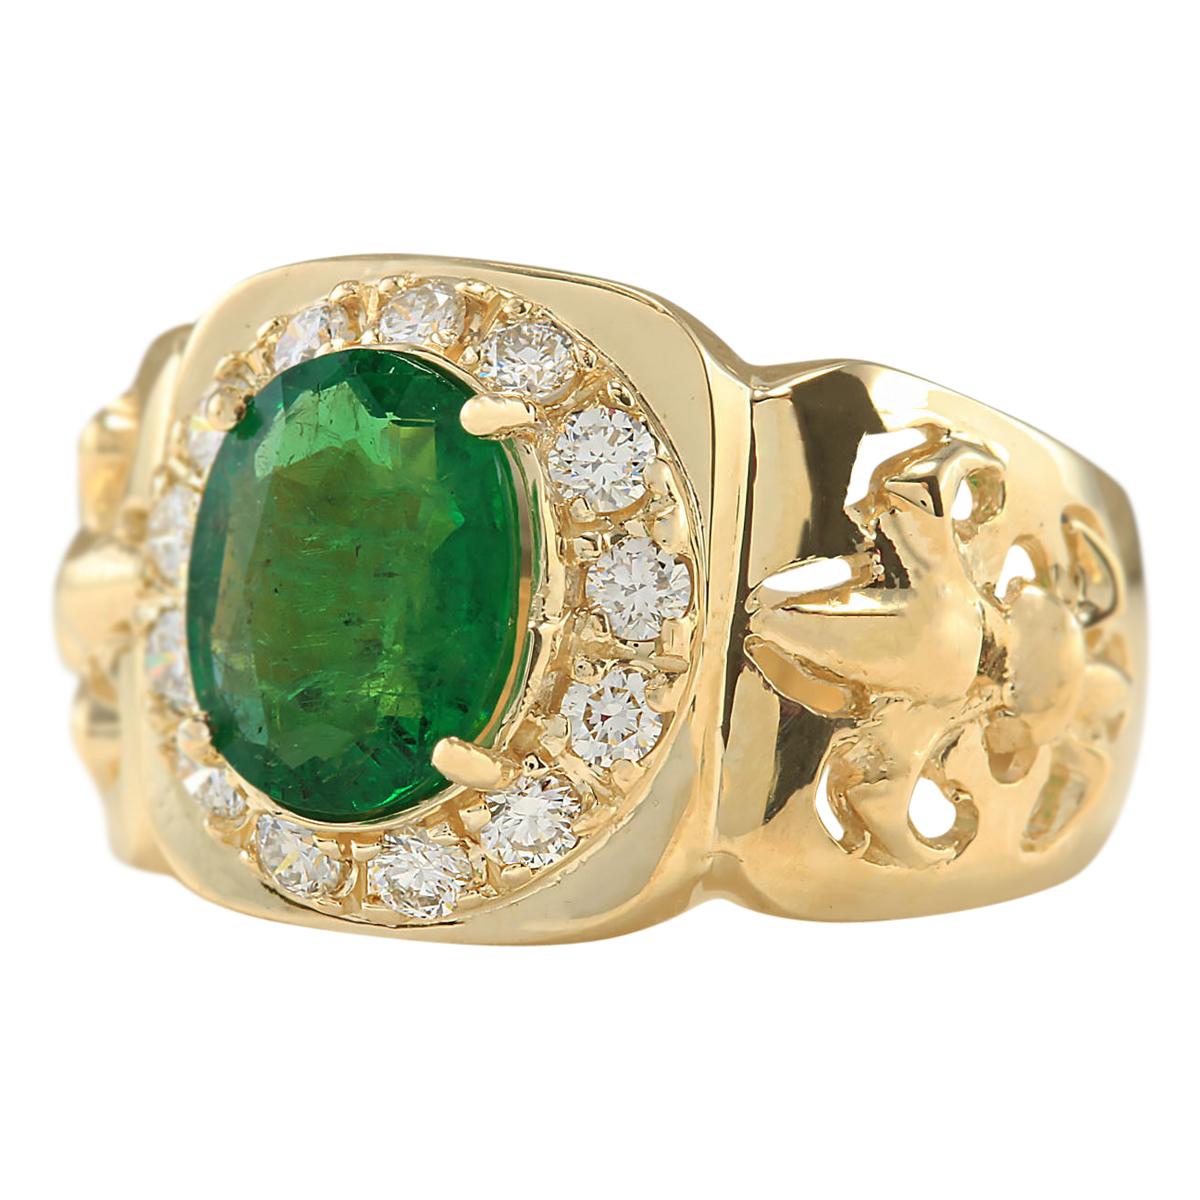 3.02 Carat Natural Emerald 14 Karat Yellow Gold Diamond Ring
Stamped: 14K Yellow Gold
Total Ring Weight: 9.2 Grams
Total Natural Emerald Weight is 2.42 Carat (Measures: 10.00x8.00 mm)
Color: Green
Total Natural Diamond Weight is 0.60 Carat
Color: